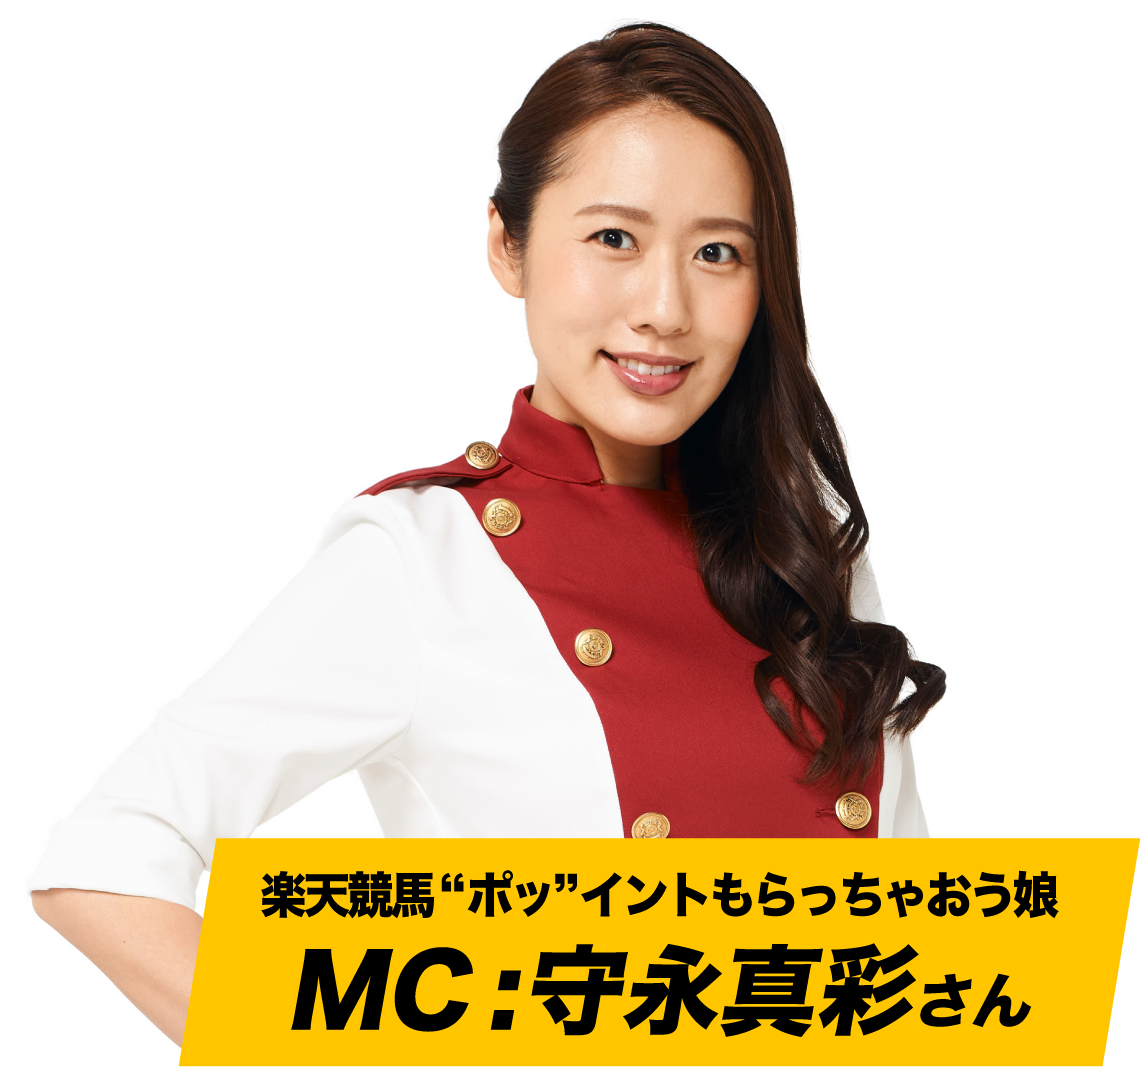 MC:守永真彩さん